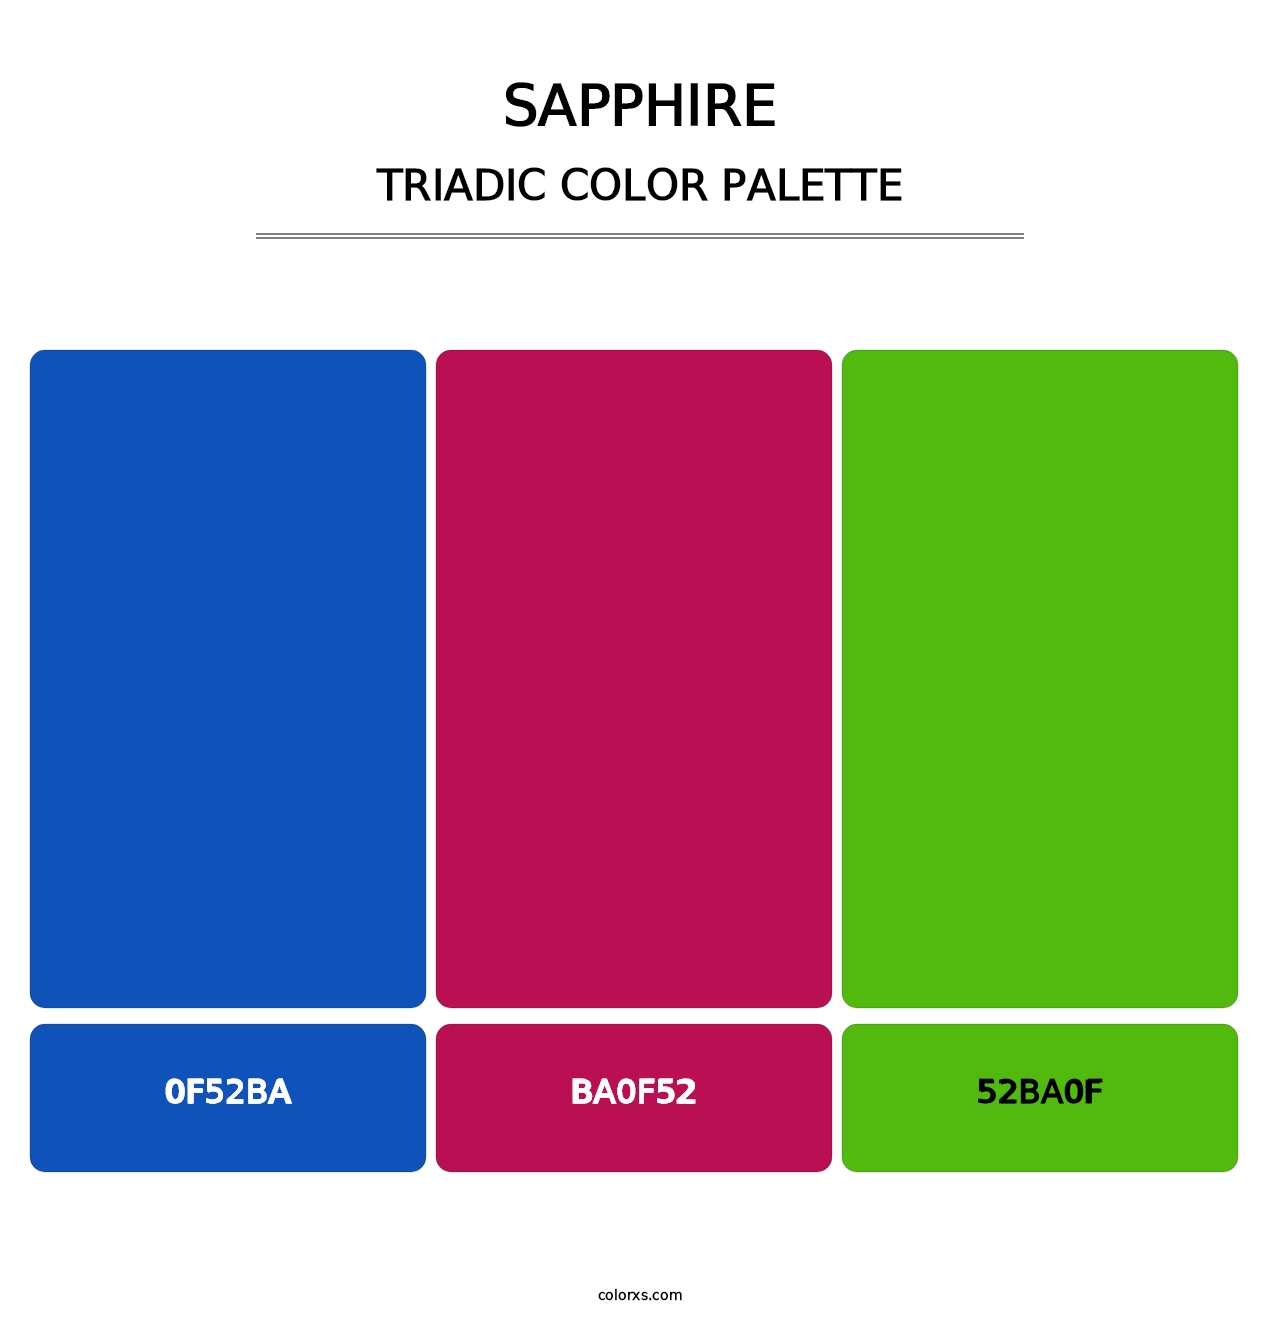 Sapphire - Triadic Color Palette